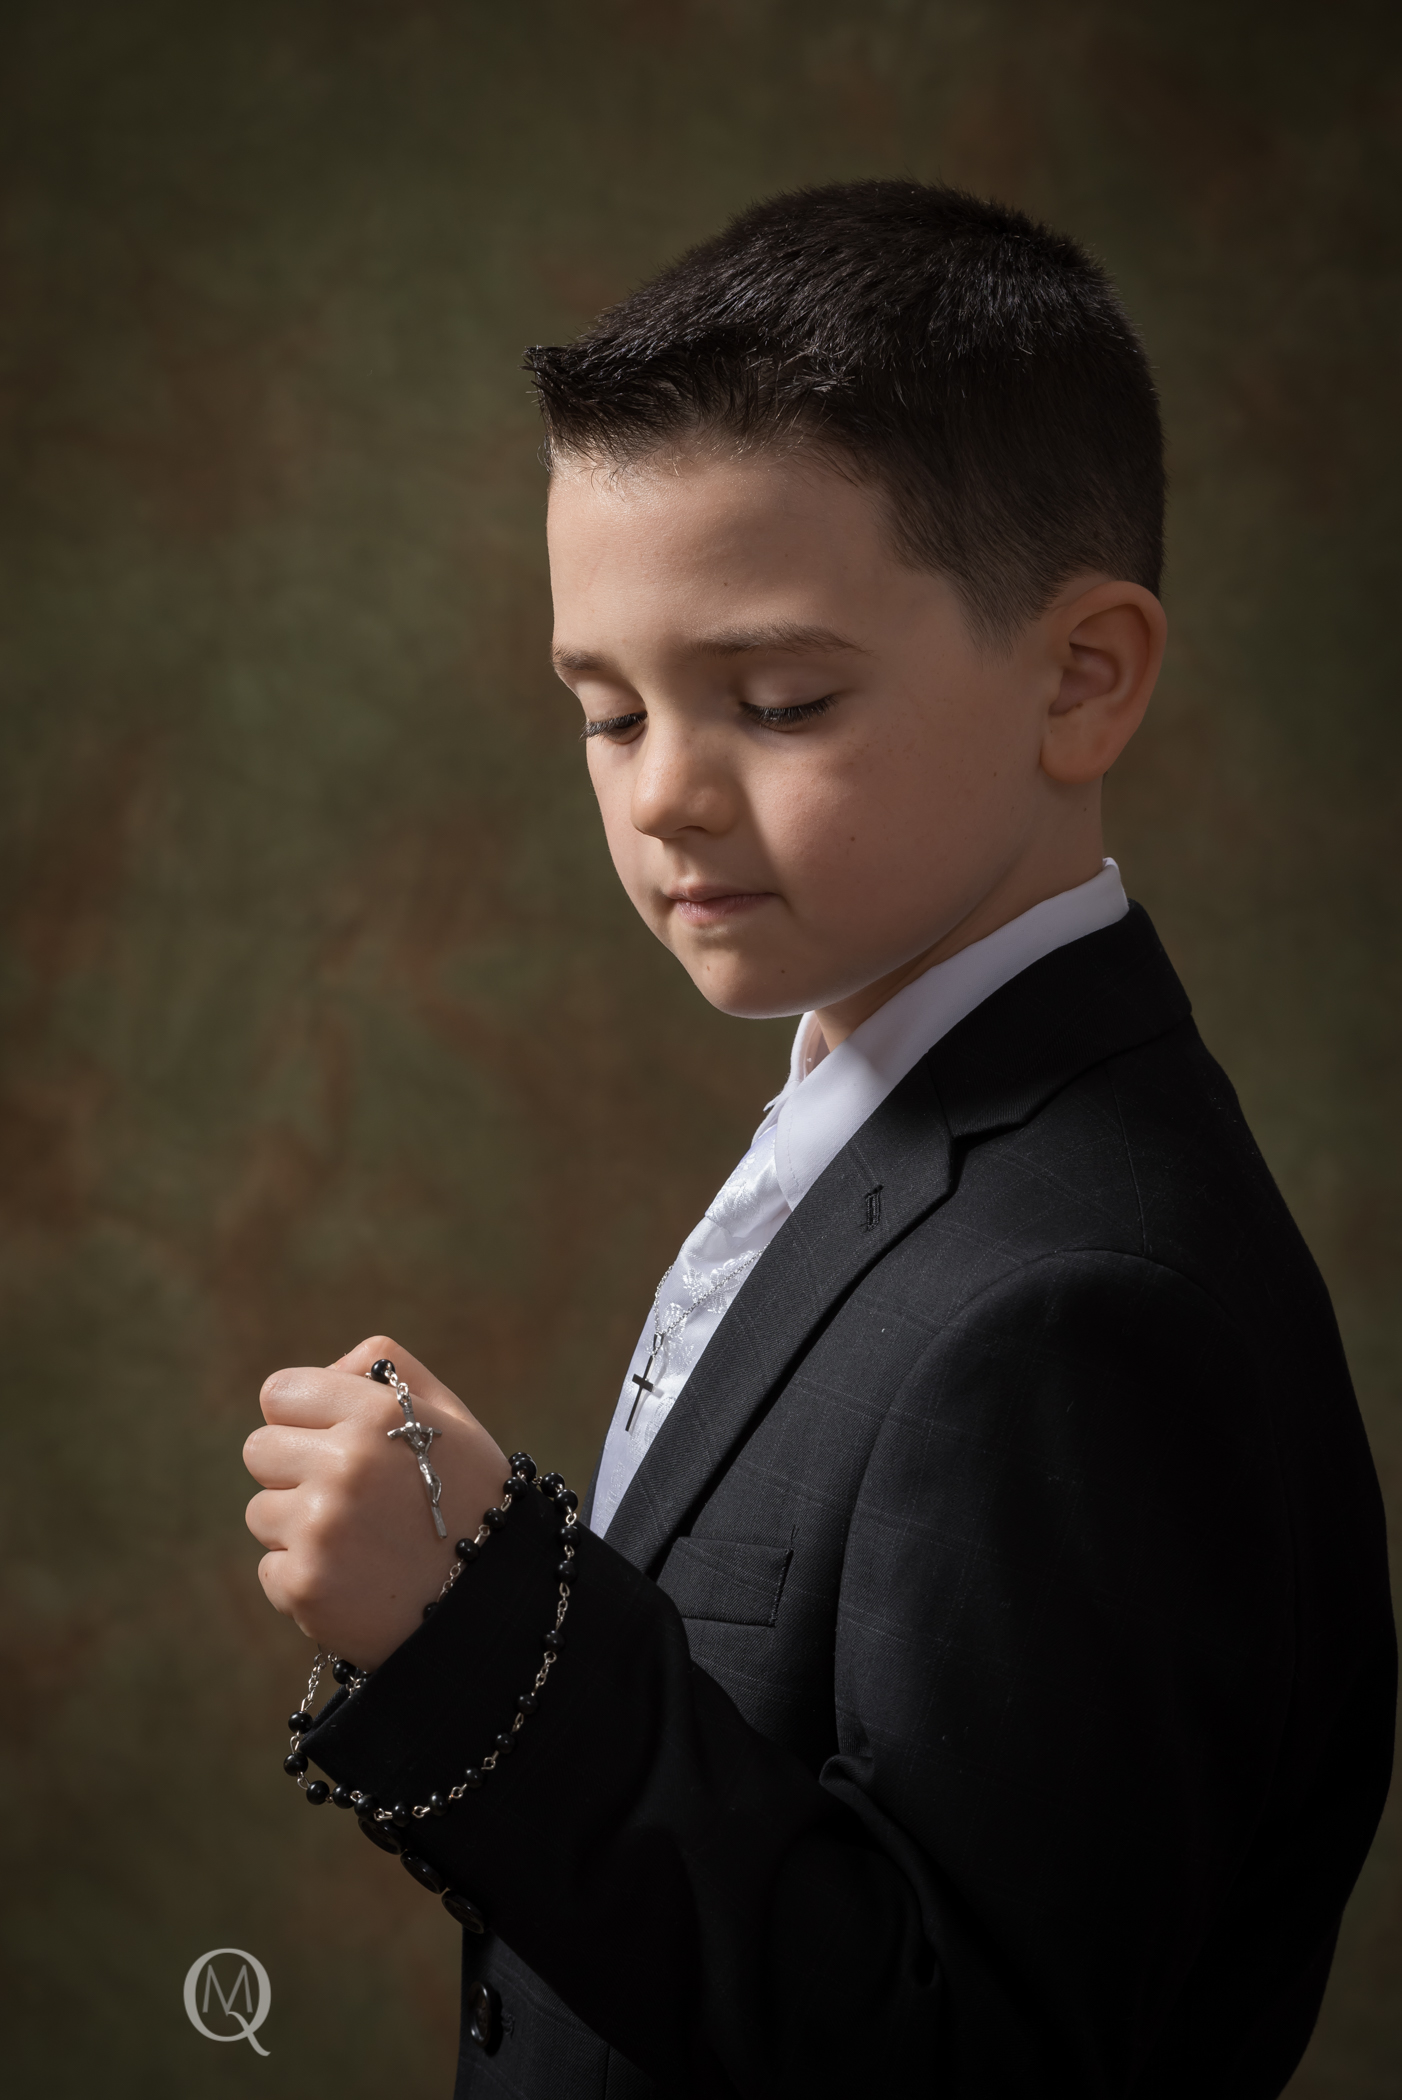 First Holy Communion Portraits | Children Photographer | Stewartsville, NJ  | 08886 » Greenwich PhotoGrafx – An Expression of Life!